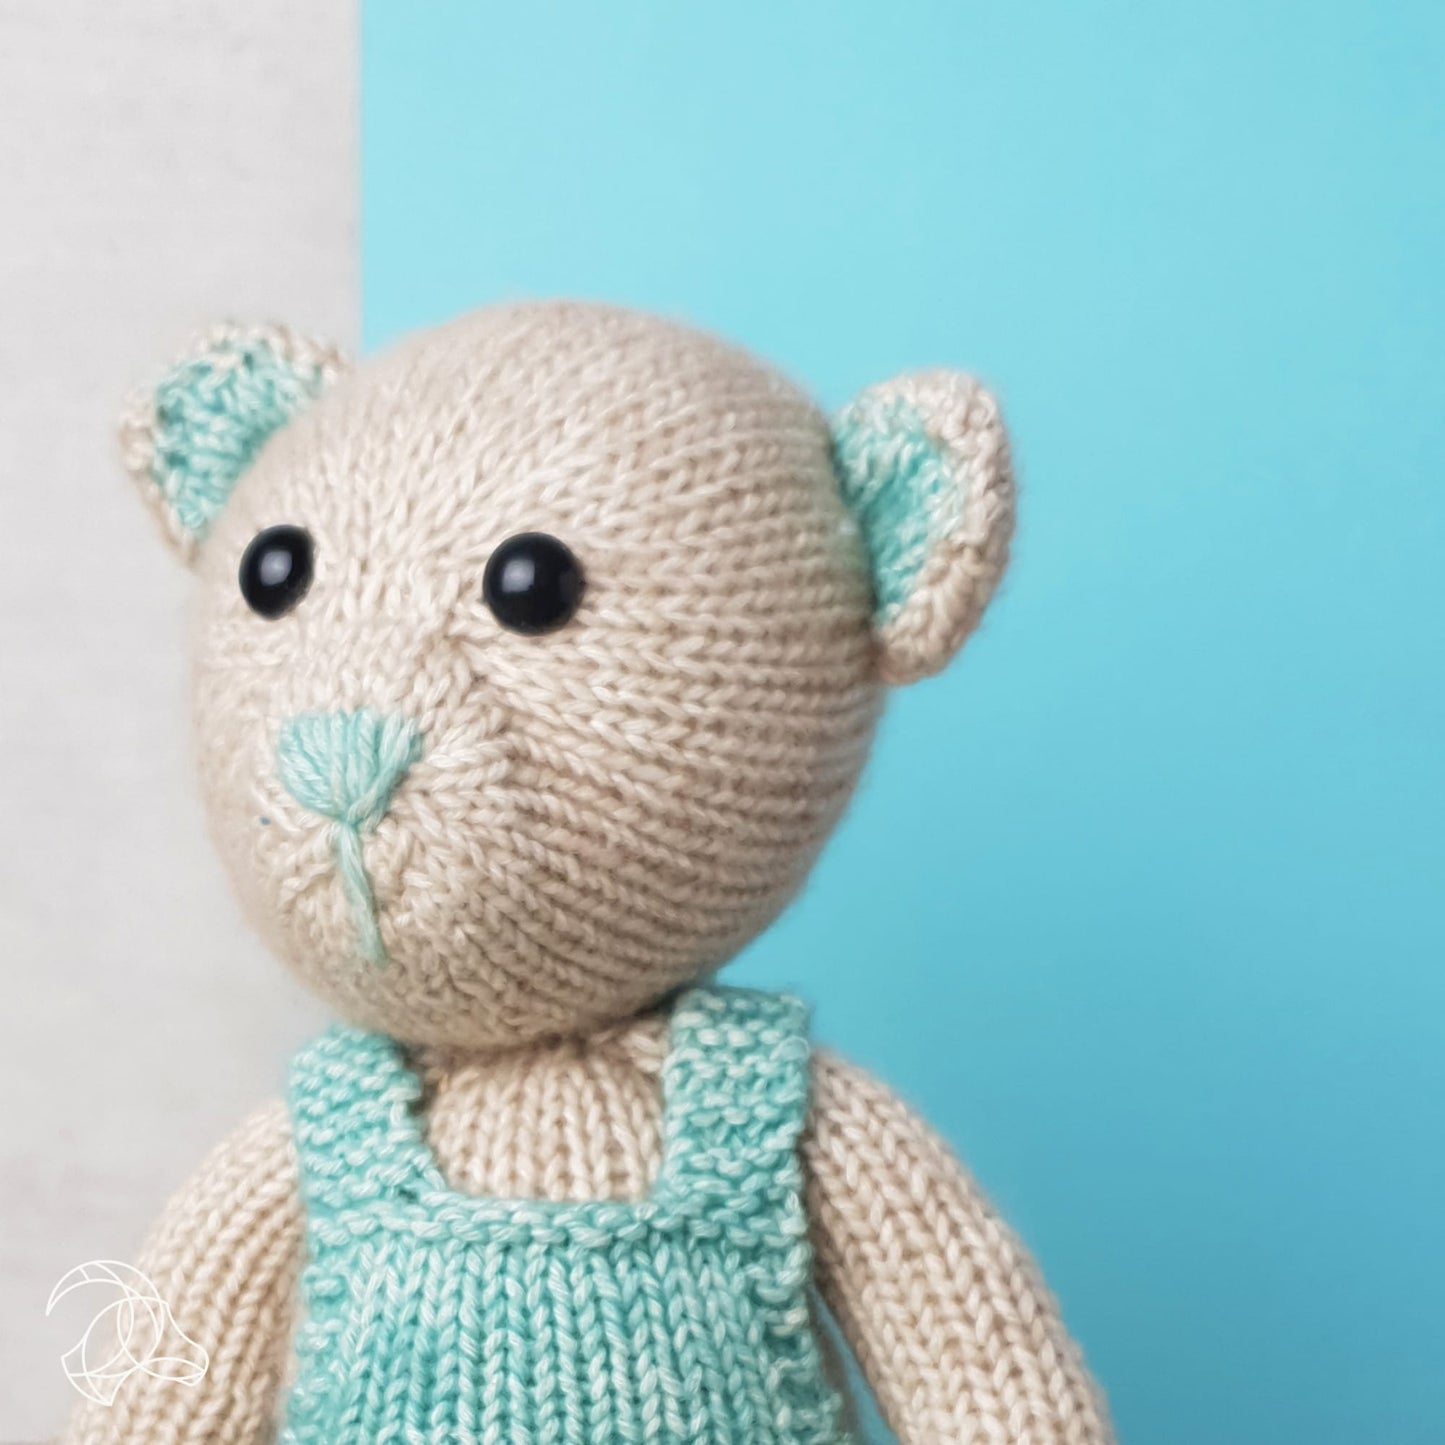 John the Bear - Gorgeous Knitting Kit from Hardicraft